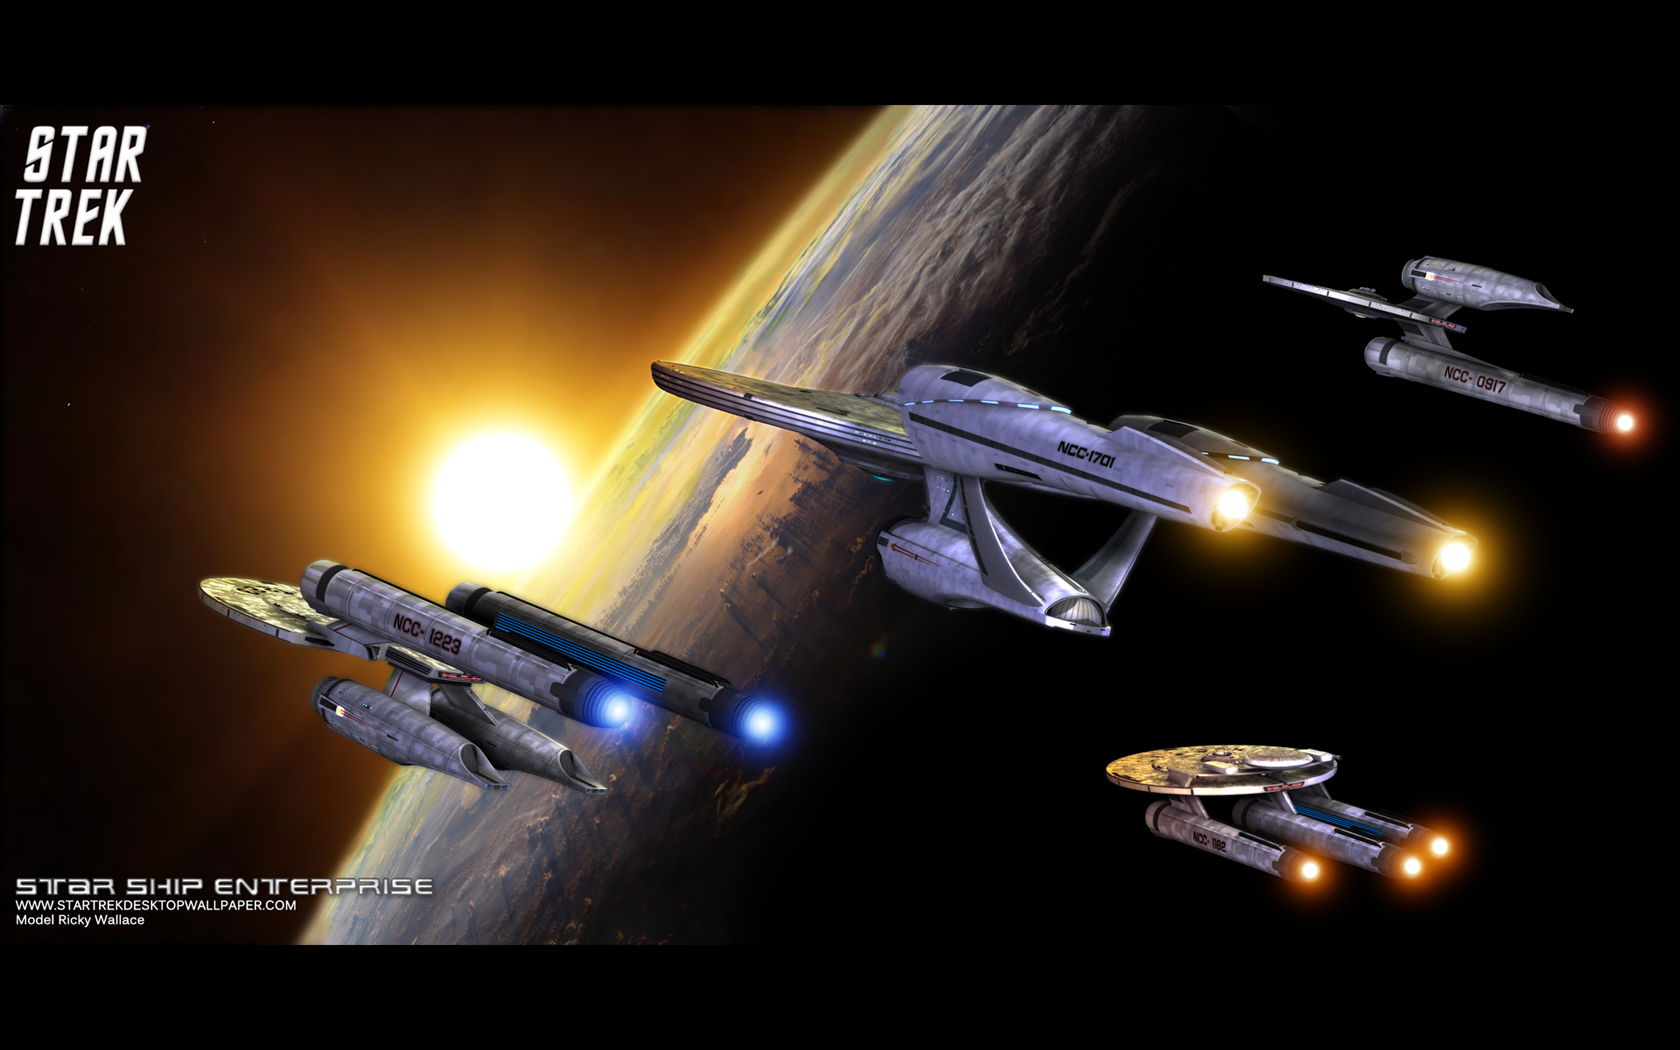 - Star Trek Star Ship Enterprise - free Star Trek computer desktop wallpaper, pictures, images.